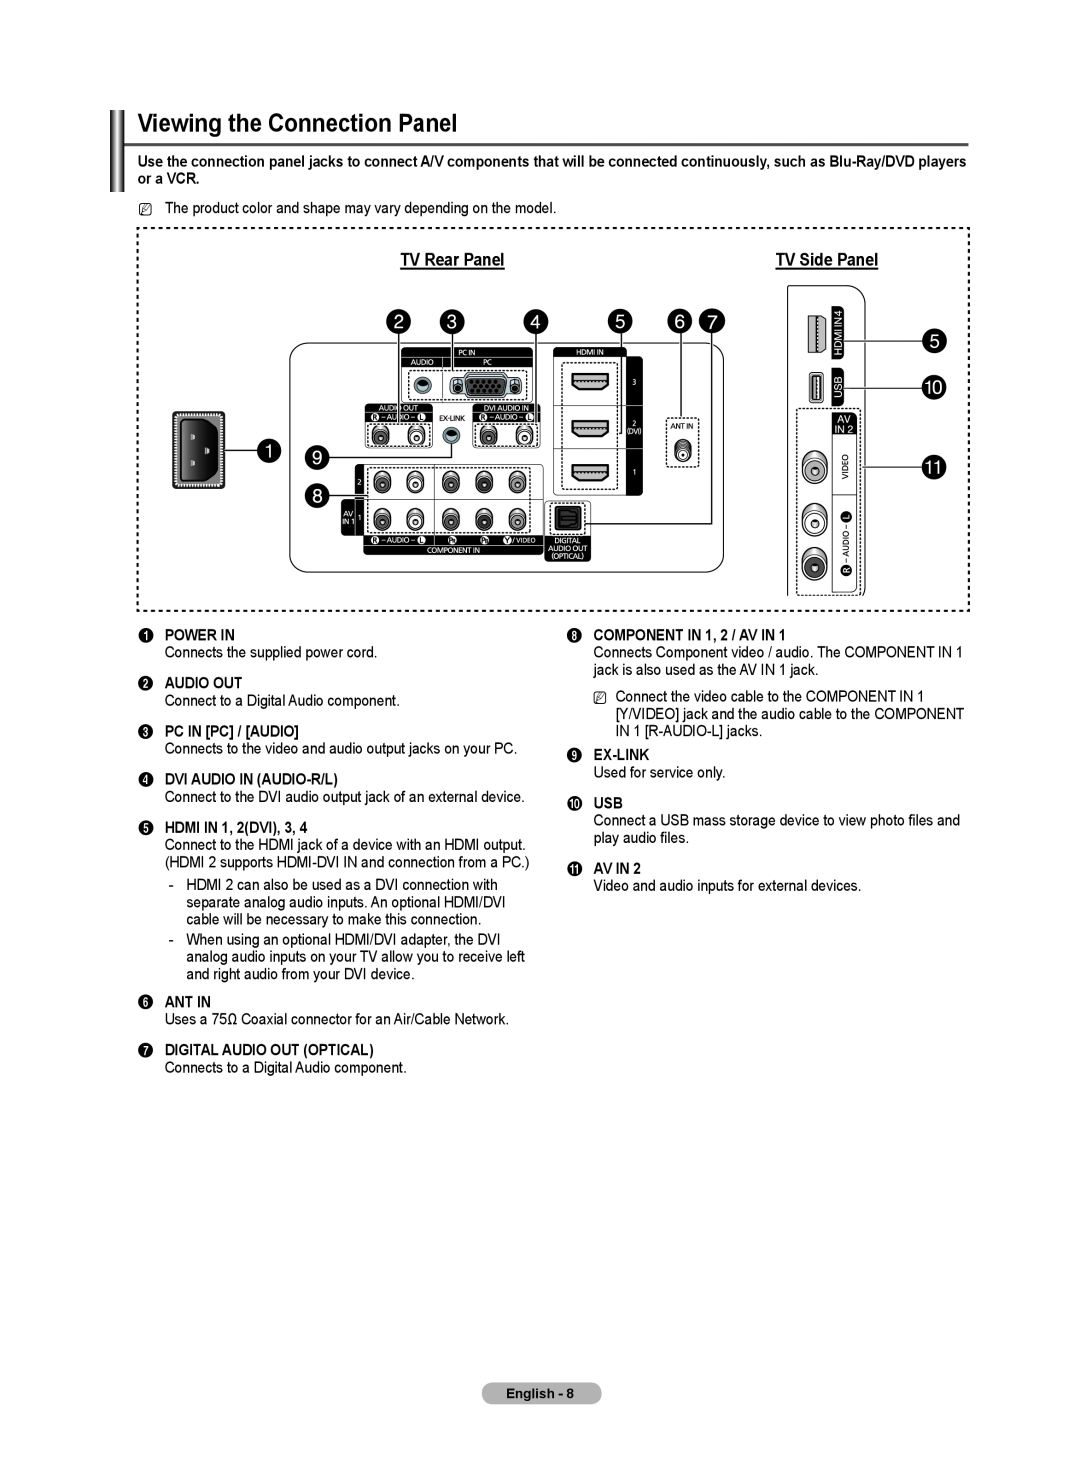 Samsung PN6B590T5F TV Rear Panel, Power In, Audio Out, Pc In Pc / Audio, Dvi Audio In Audio-R/L, HDMI IN 1, 2DVI, 3, 0 USB 